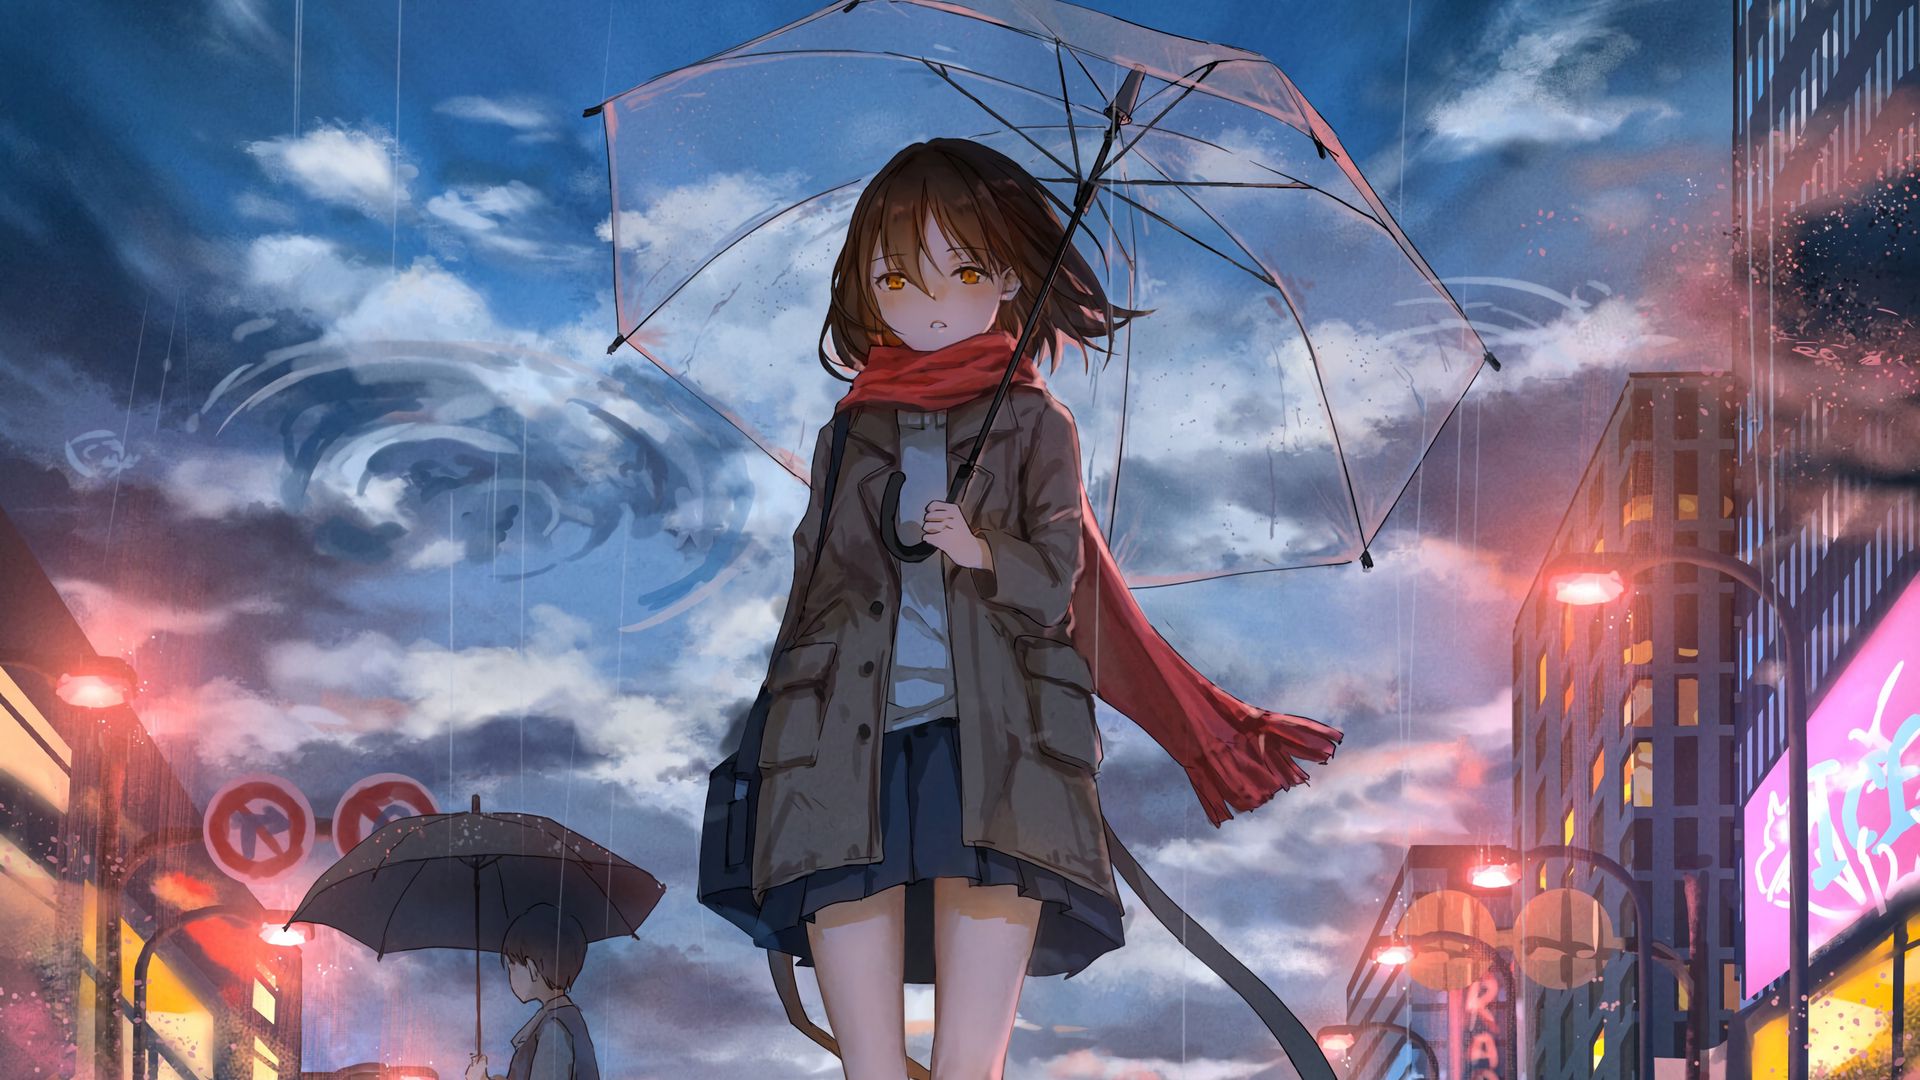 Download wallpaper x girl umbrella anime rain sadness full hd hdtv fhd p hd background